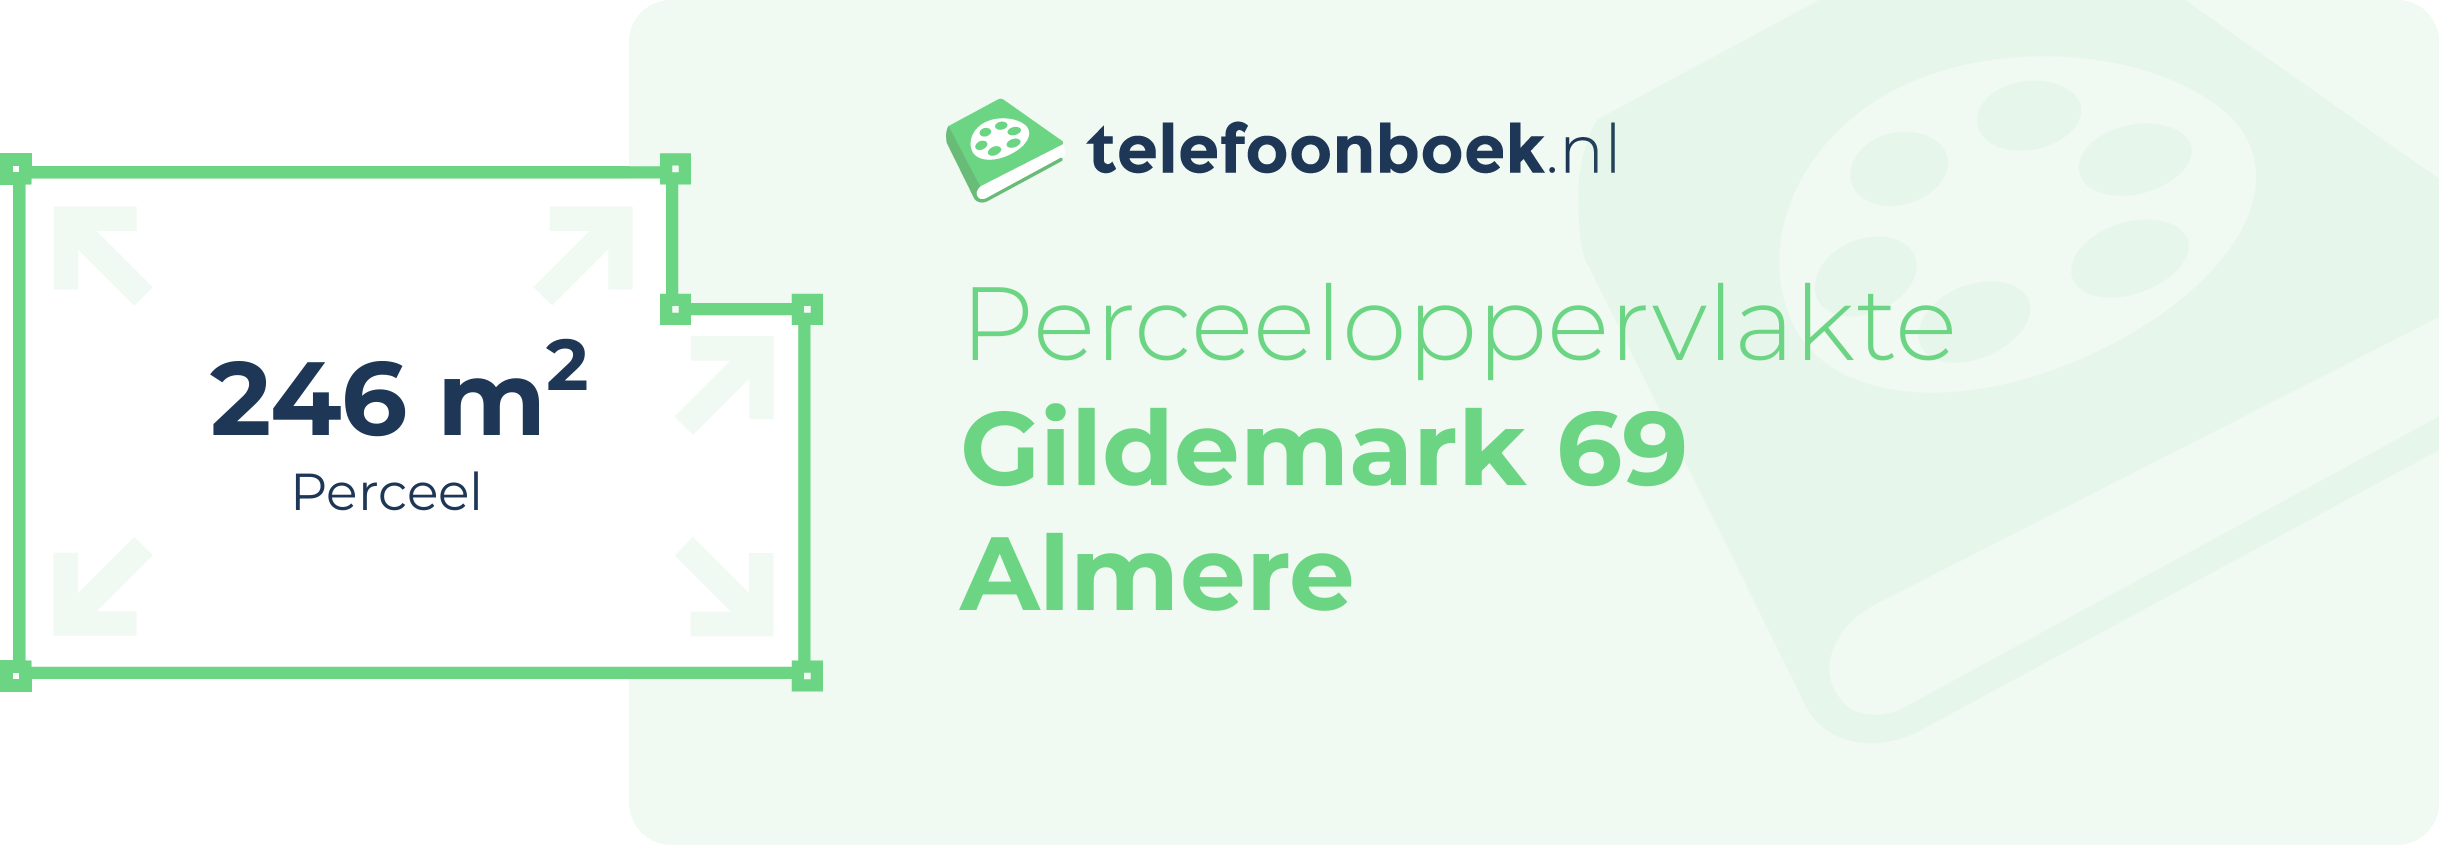 Perceeloppervlakte Gildemark 69 Almere